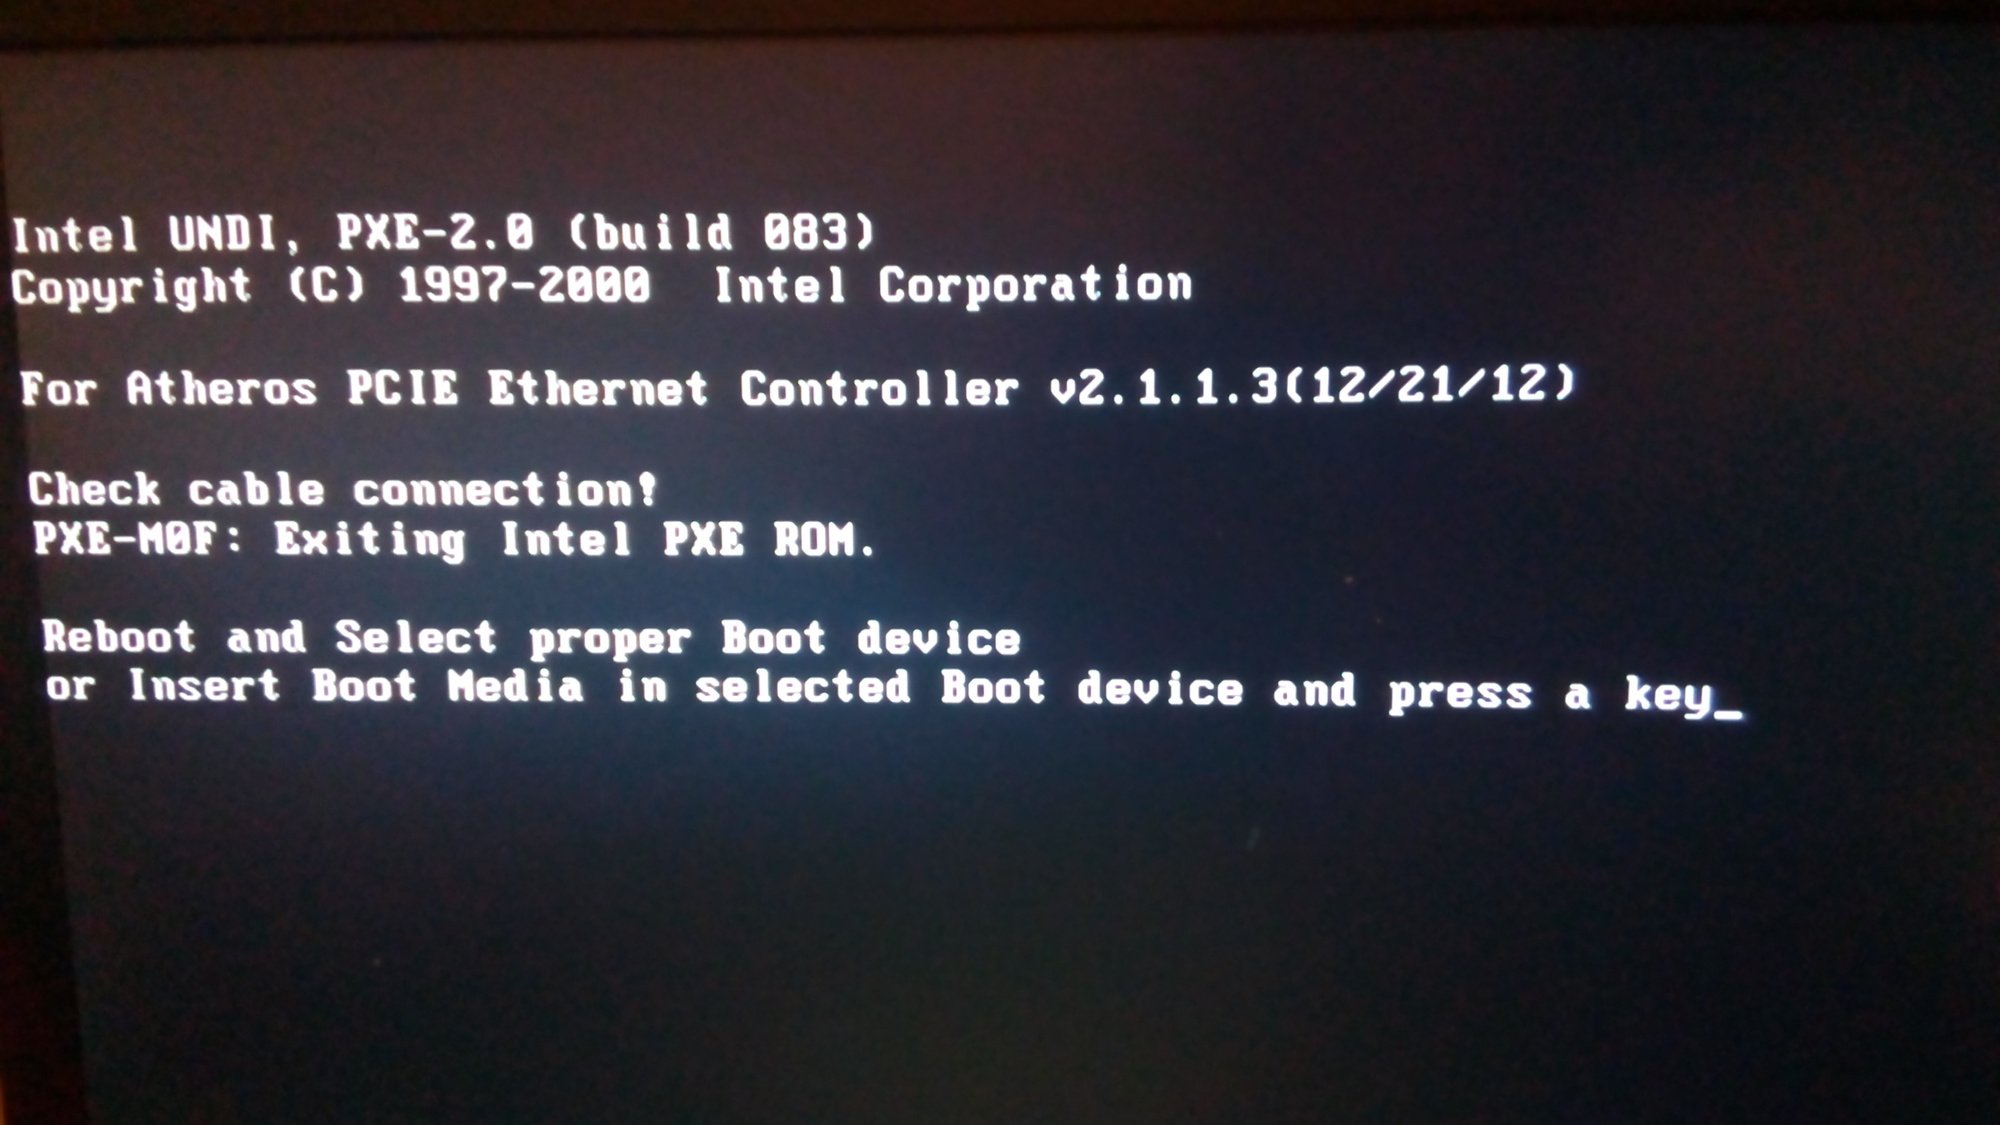 Problemas repairing windows via USB dce1ff65-6505-4044-8fad-9e7cee50eea7?upload=true.jpg